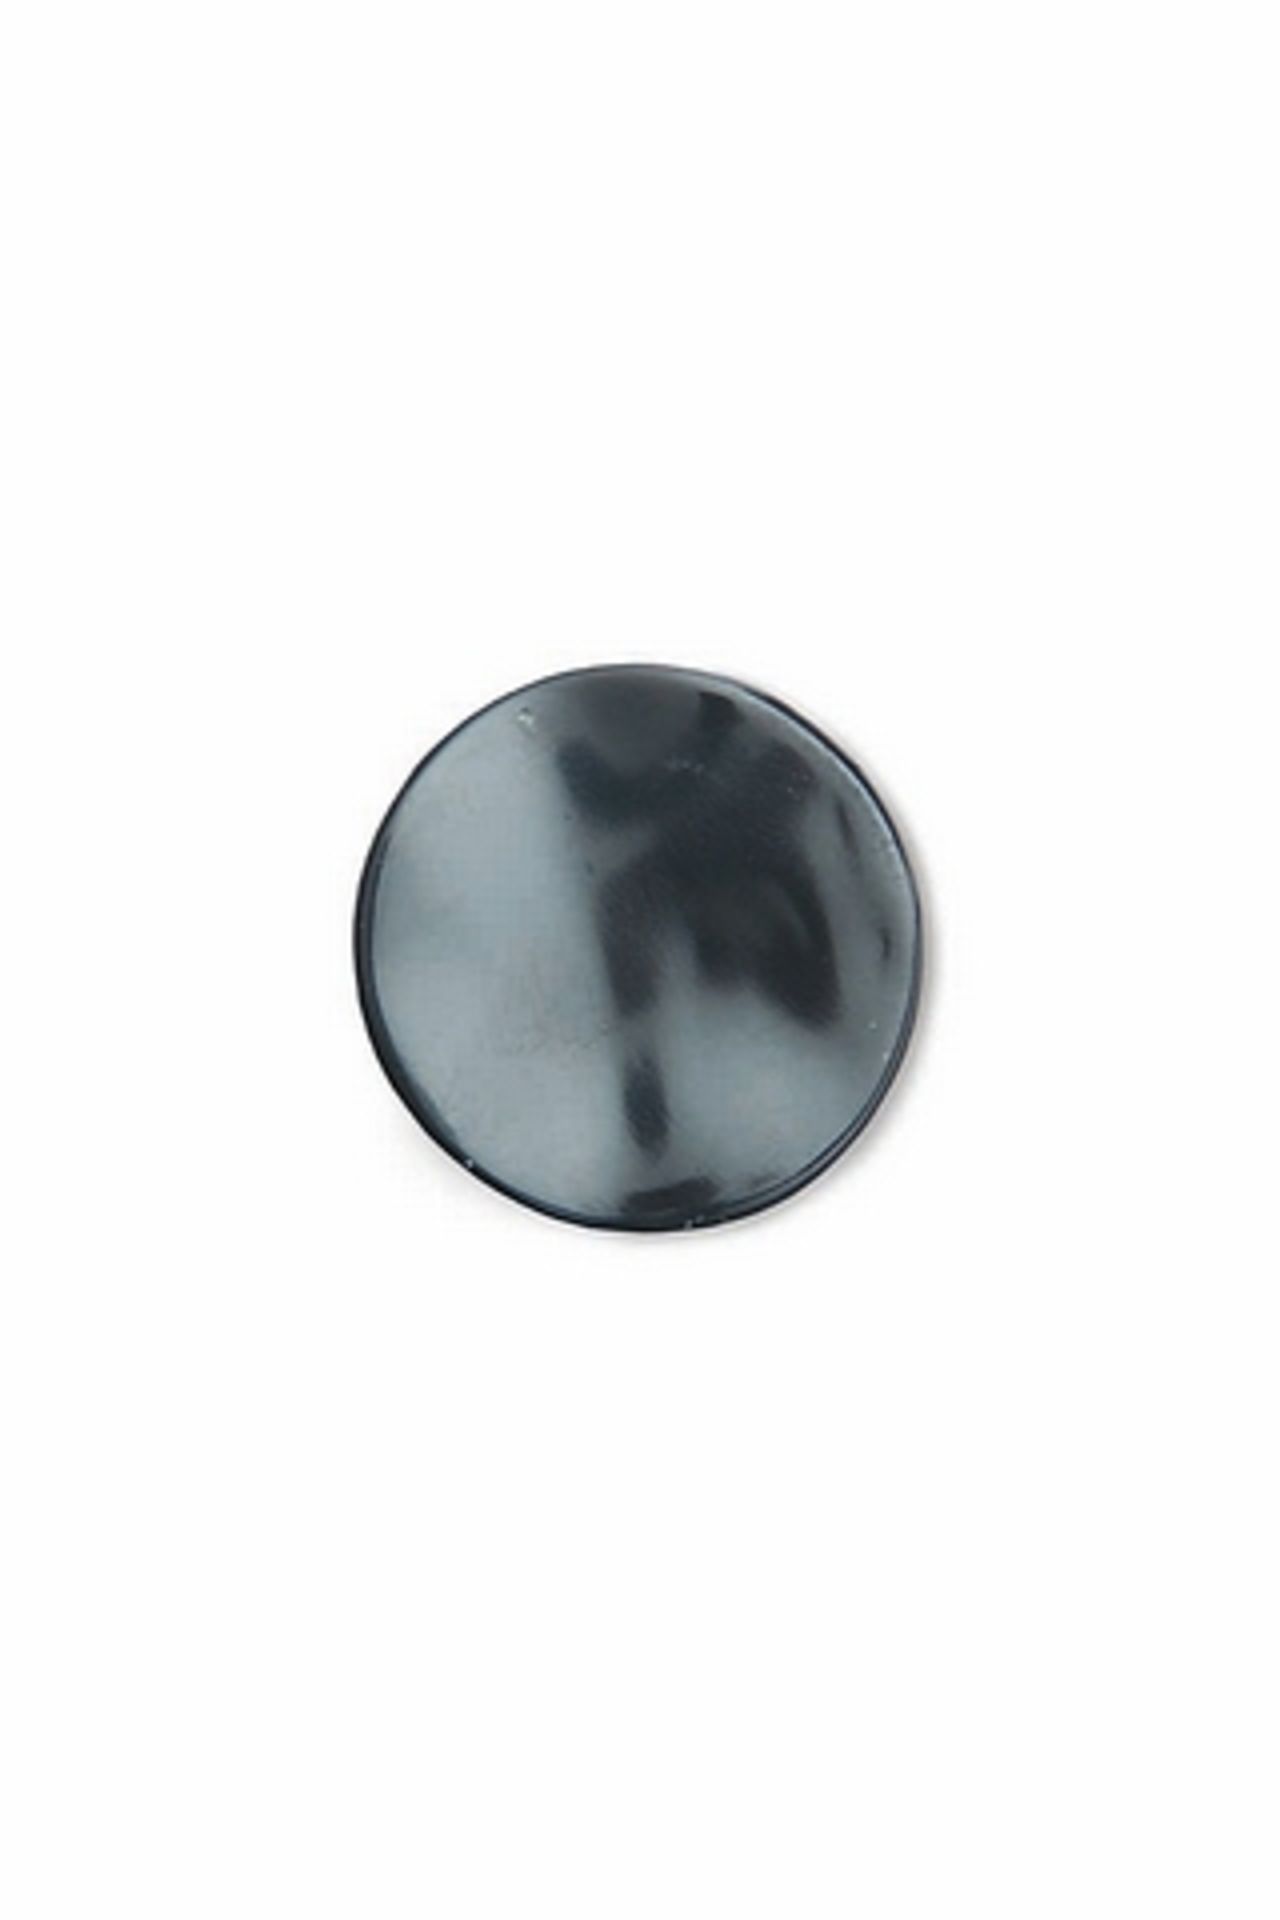 Handle Saucer black small black tab shell 1.5x4cm Cravt SKU 398209